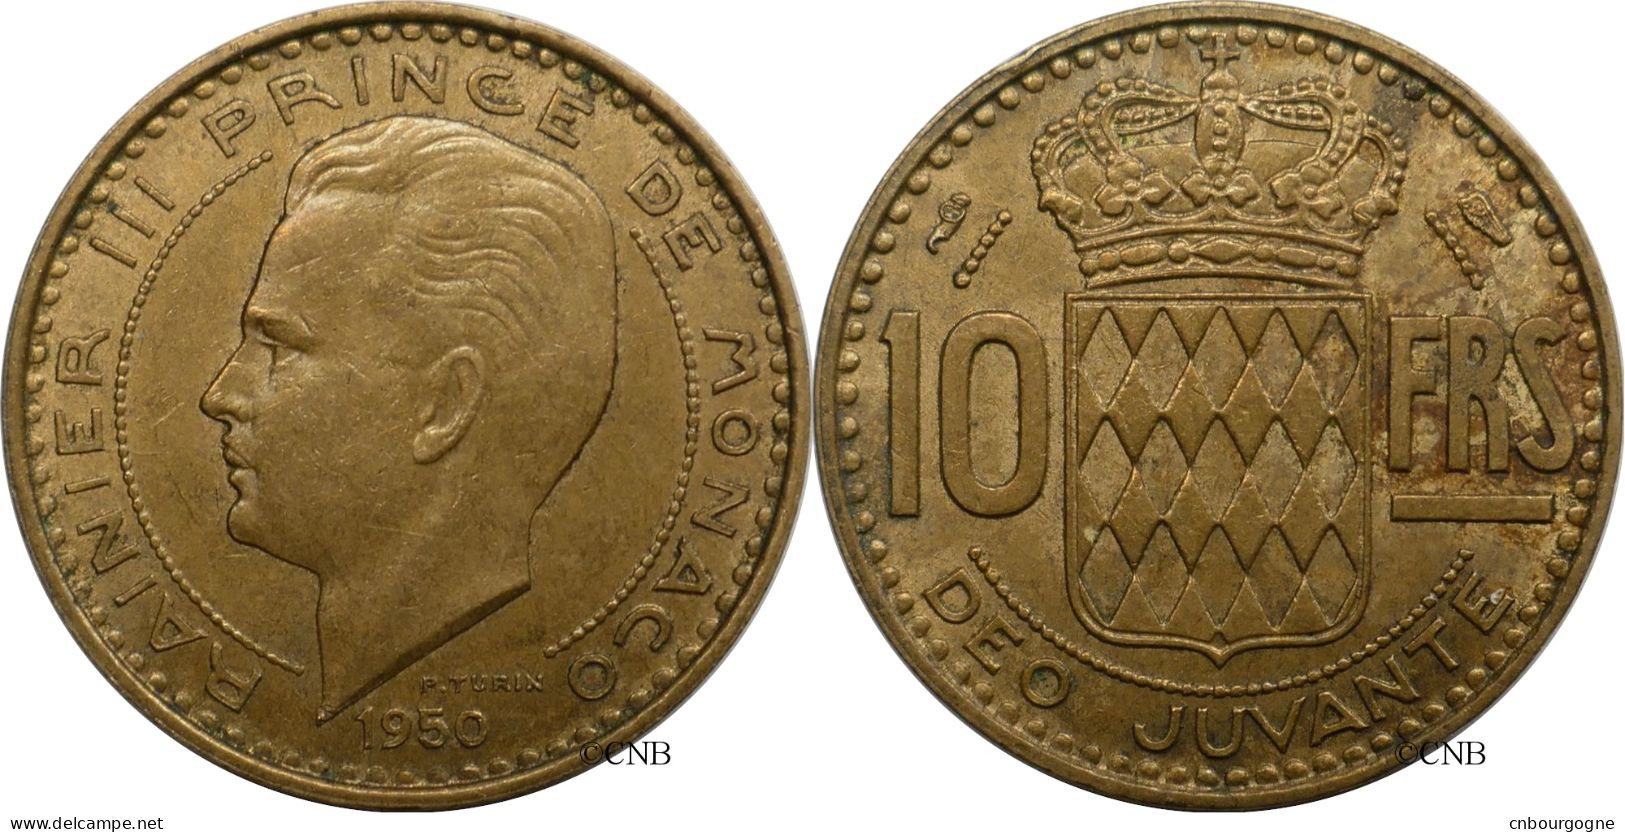 Monaco - Principauté - Rainier III - 10 Francs 1950 - TTB+/AU50 - Mon6572 - 1949-1956 Oude Frank